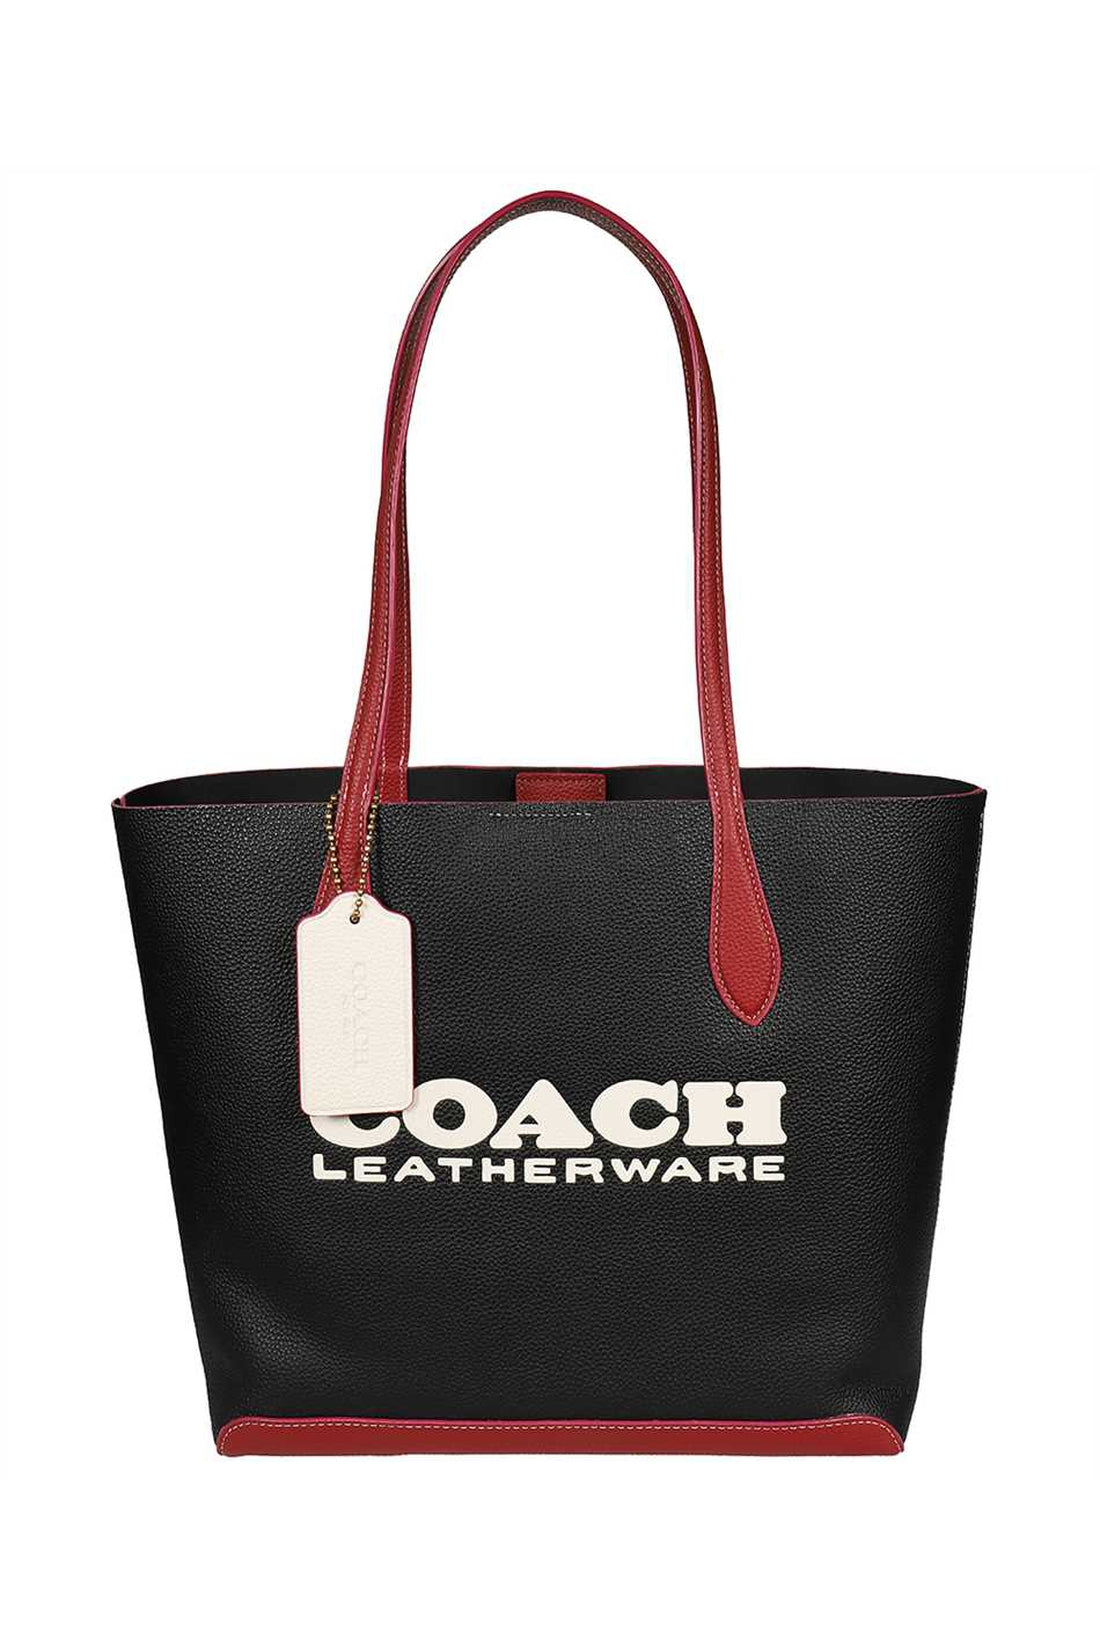 Coach-OUTLET-SALE-Leather tote-ARCHIVIST